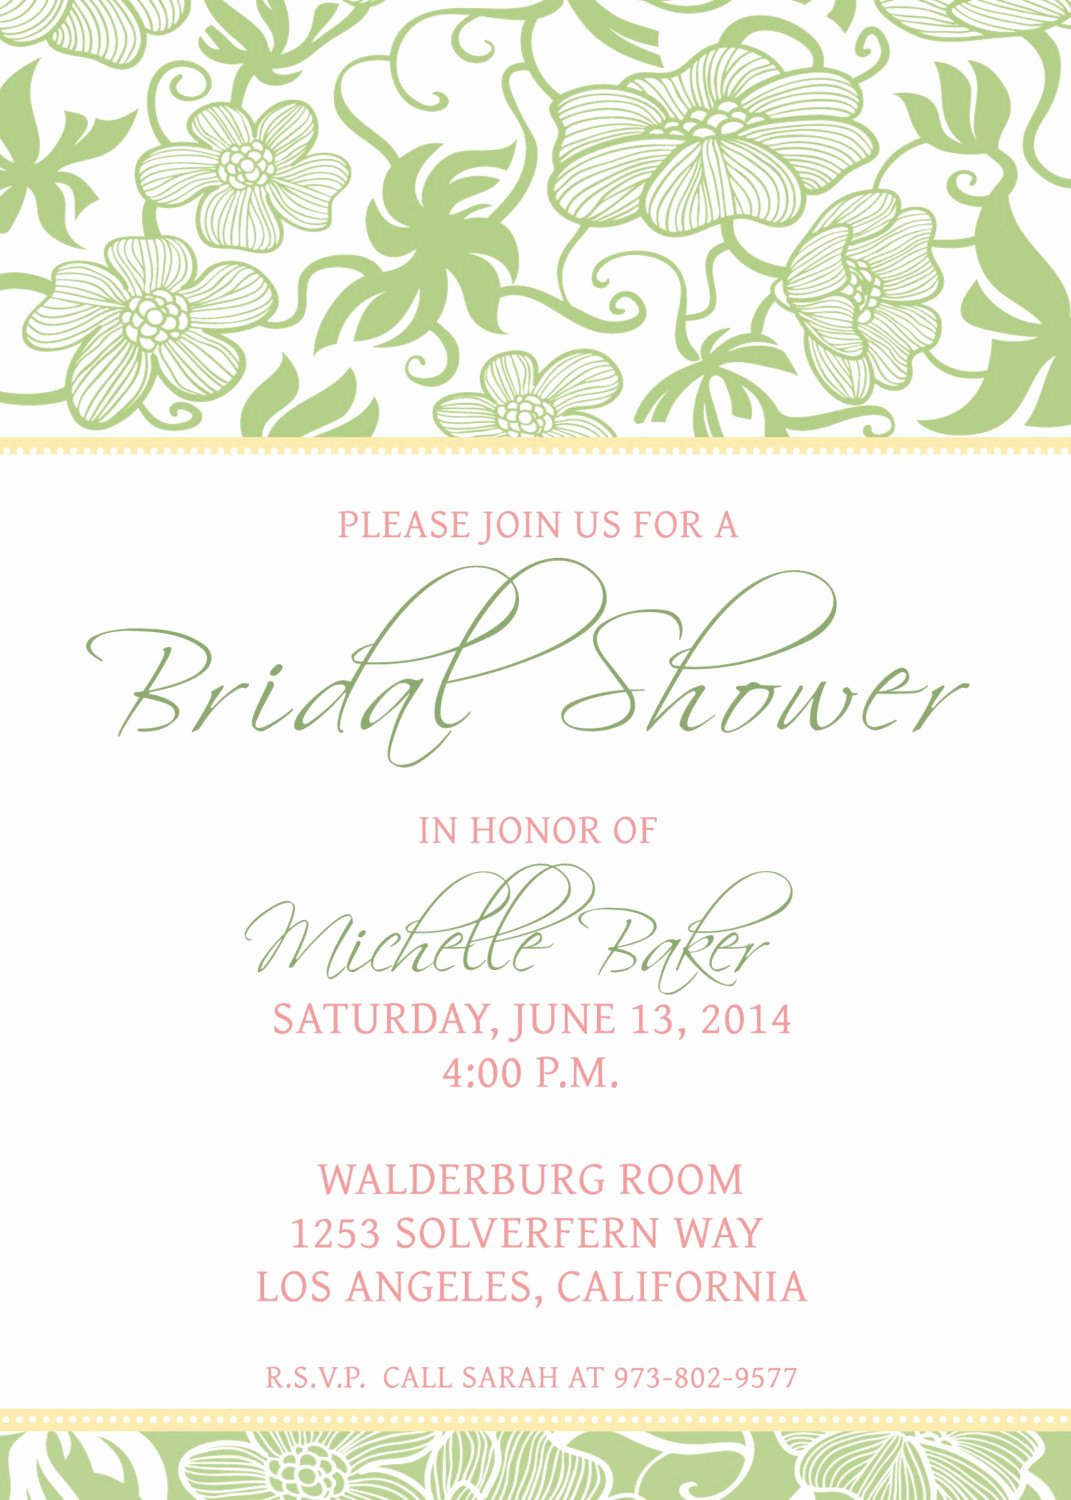 Bridal Shower Invite Template New Bridal Shower Invitations Bridal Shower Invitations Free